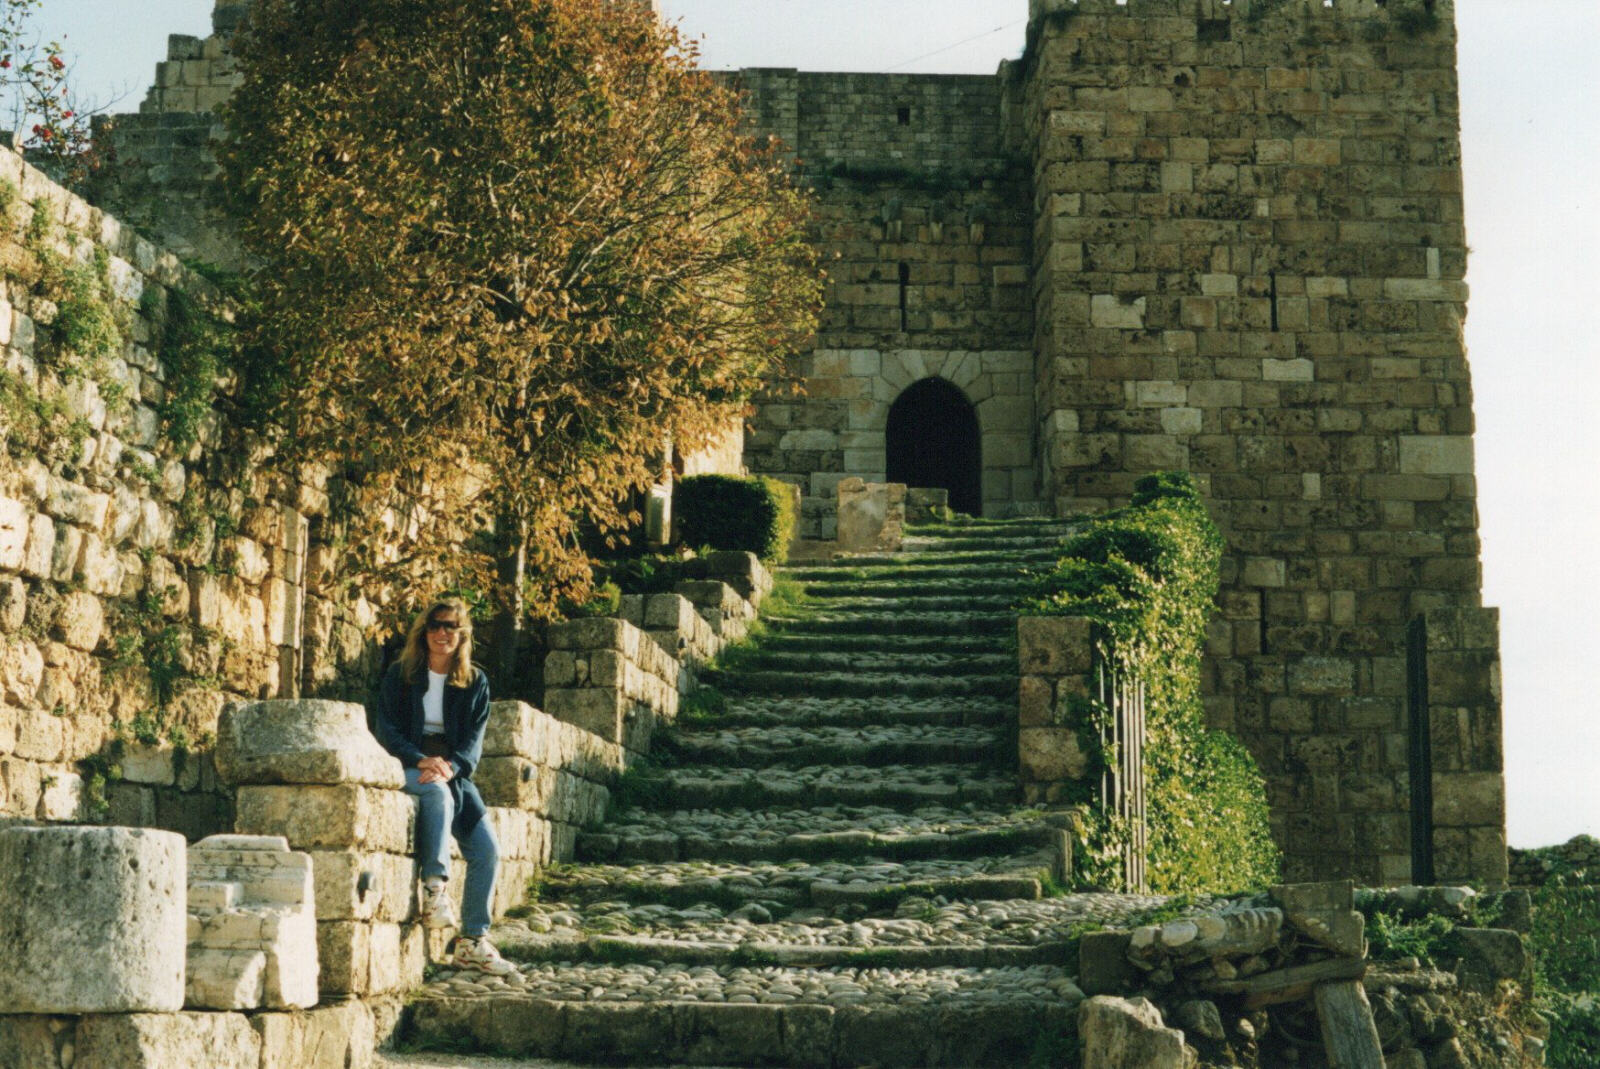 The crusader castle at Byblos, Lebanon